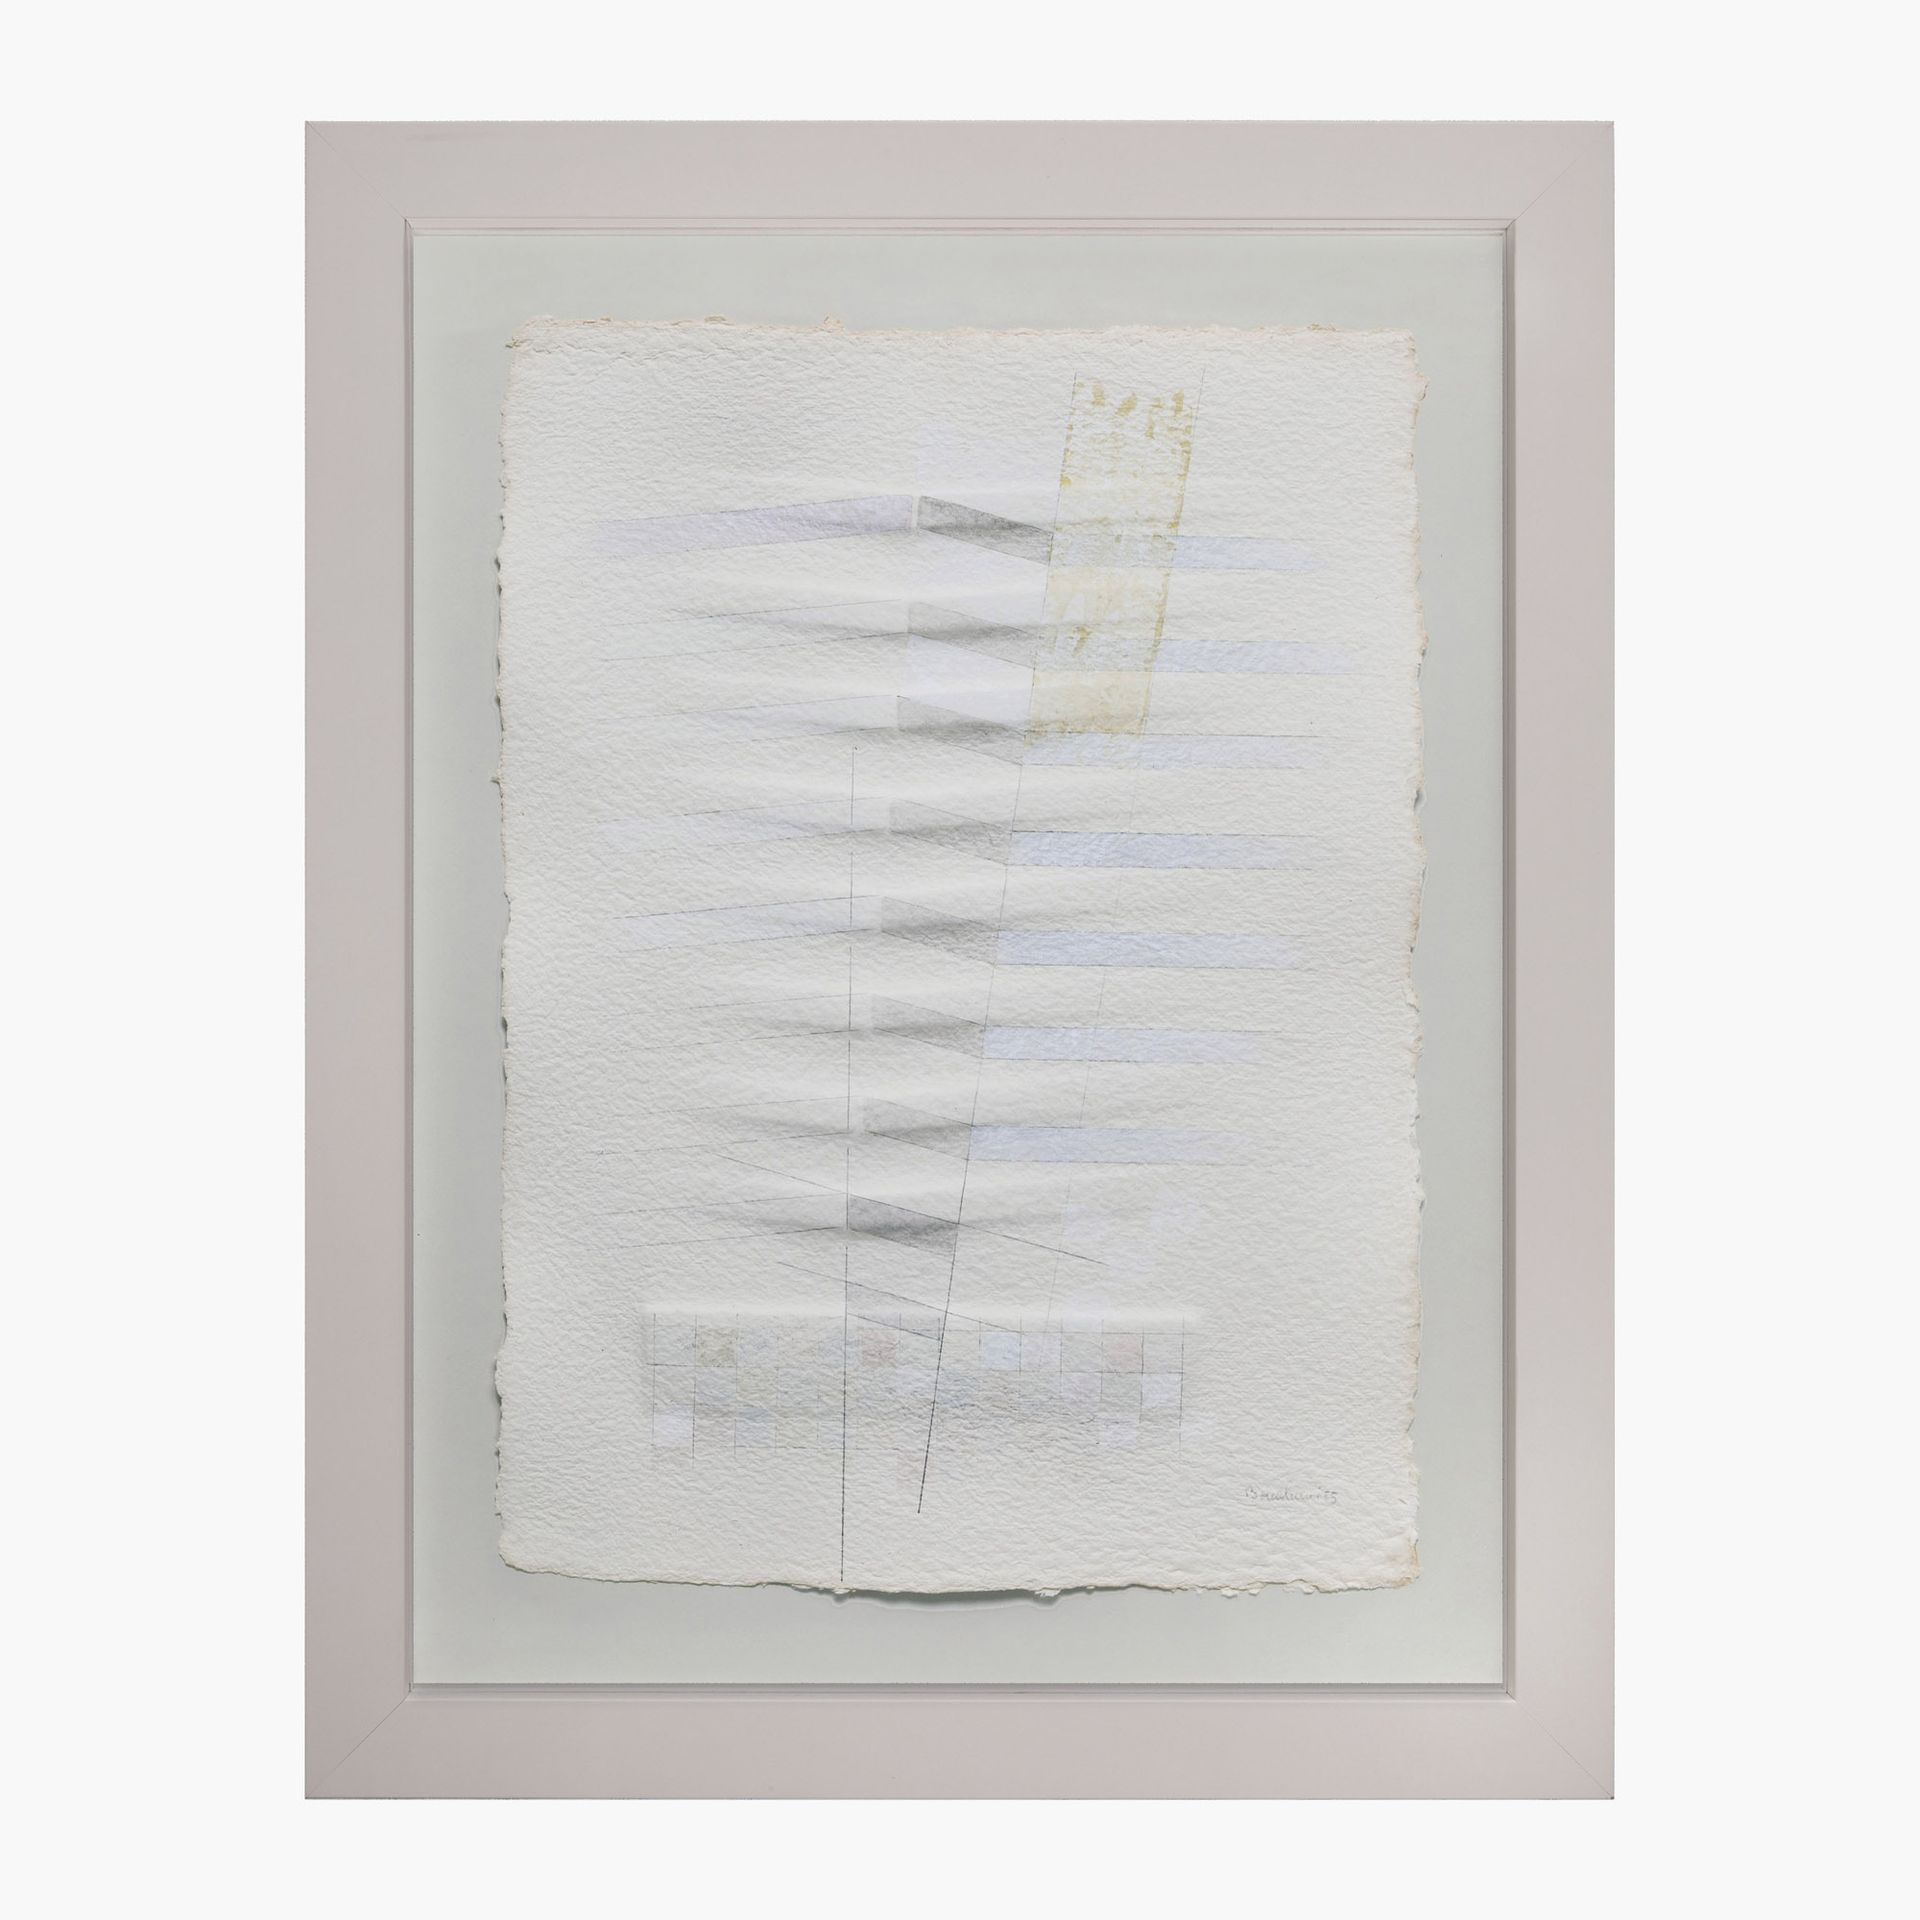 Agostino Bonalumi Agostino Bonalumi, Untitled



1985

Extroflex paper and water&hellip;